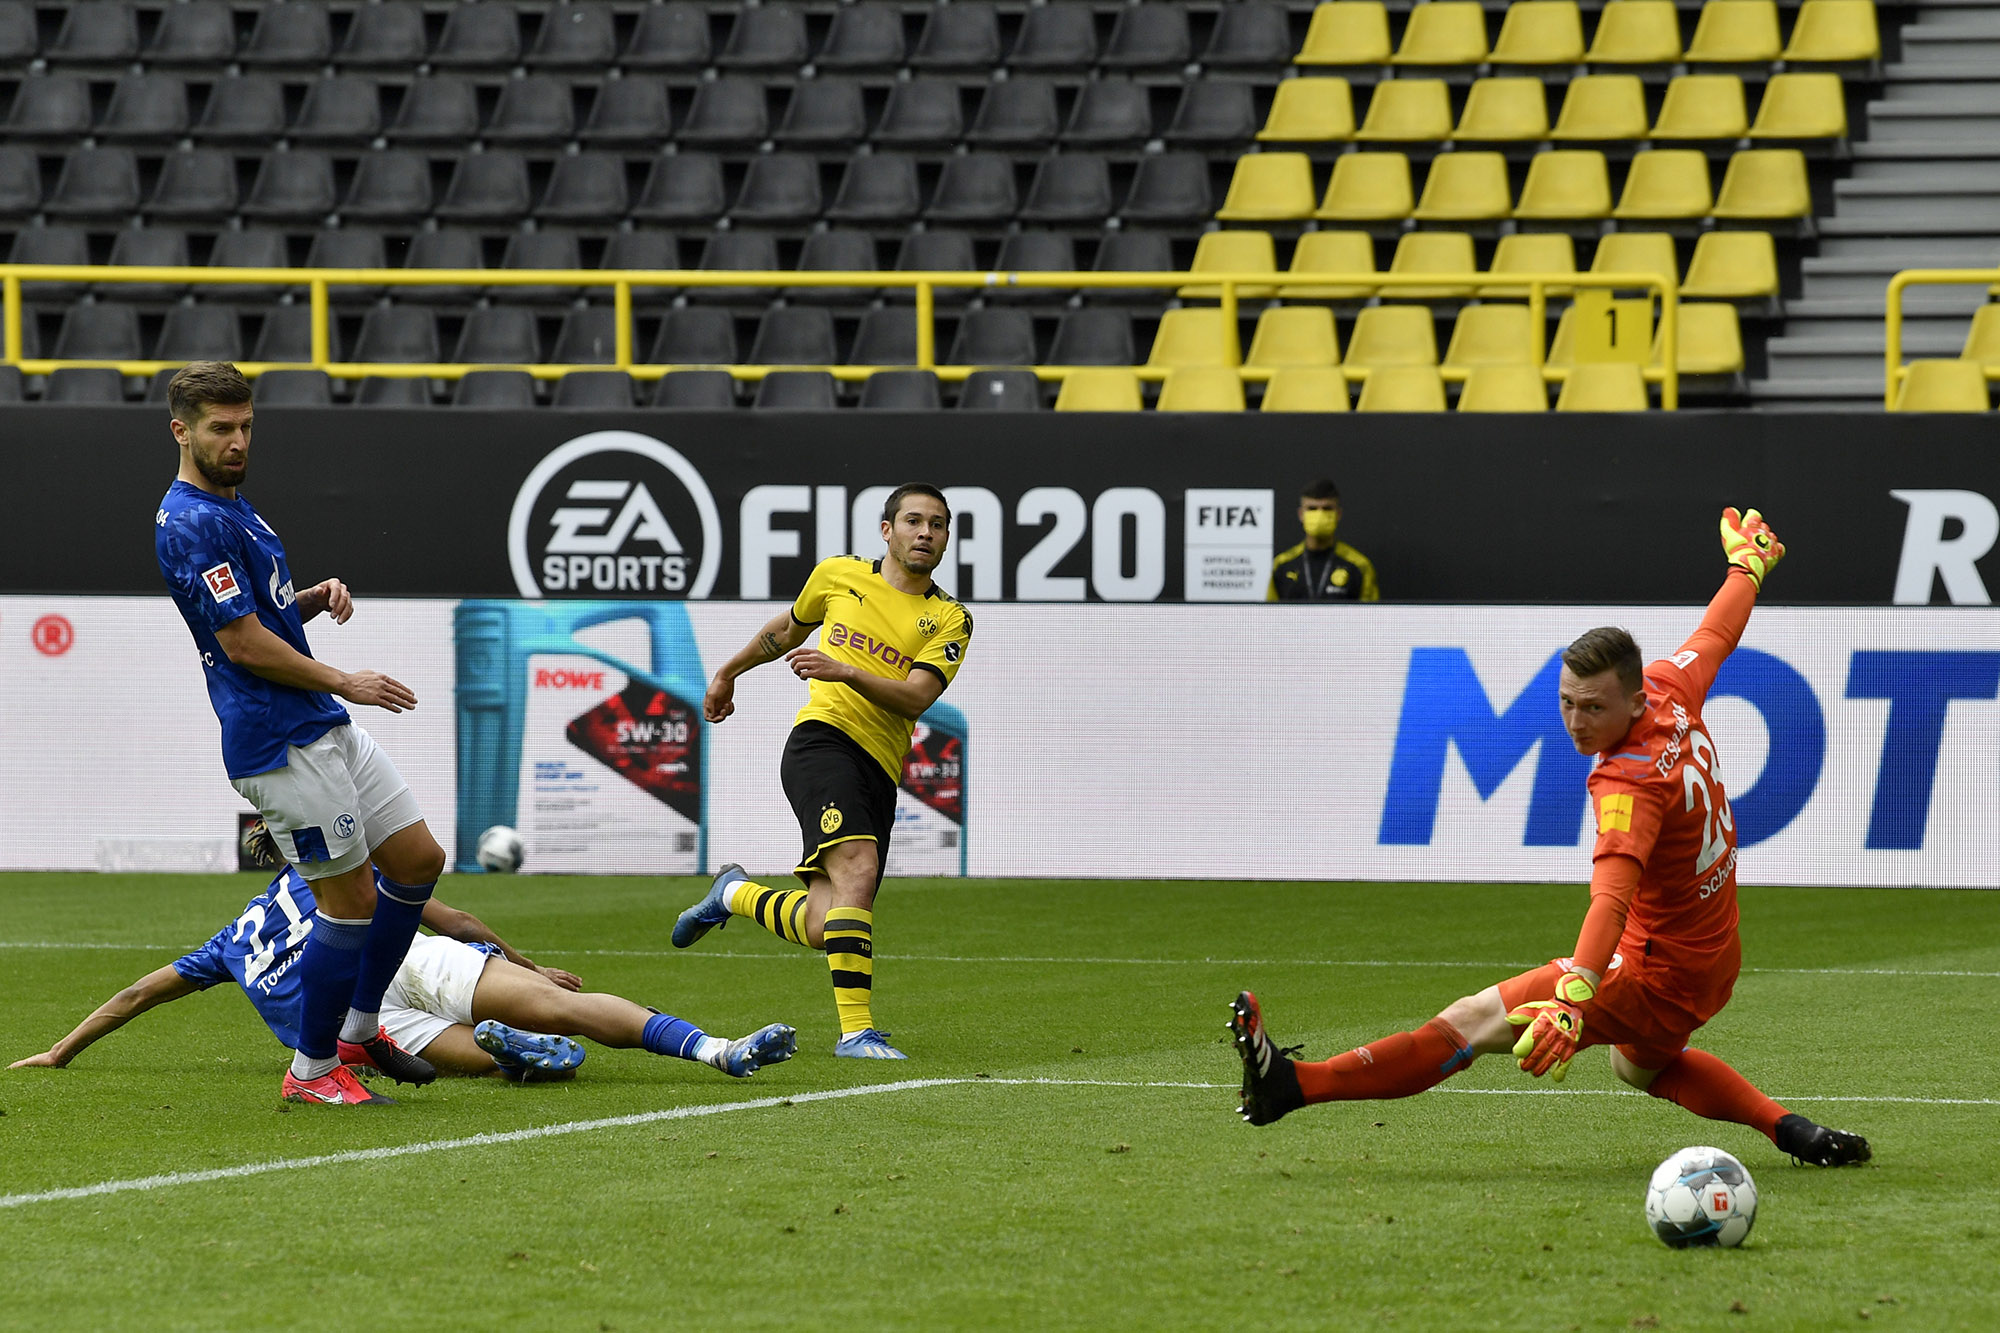 Raphael Guerreiro of Borussia Dortmund shoots and scores against Schalke,&nbsp;on May 16.